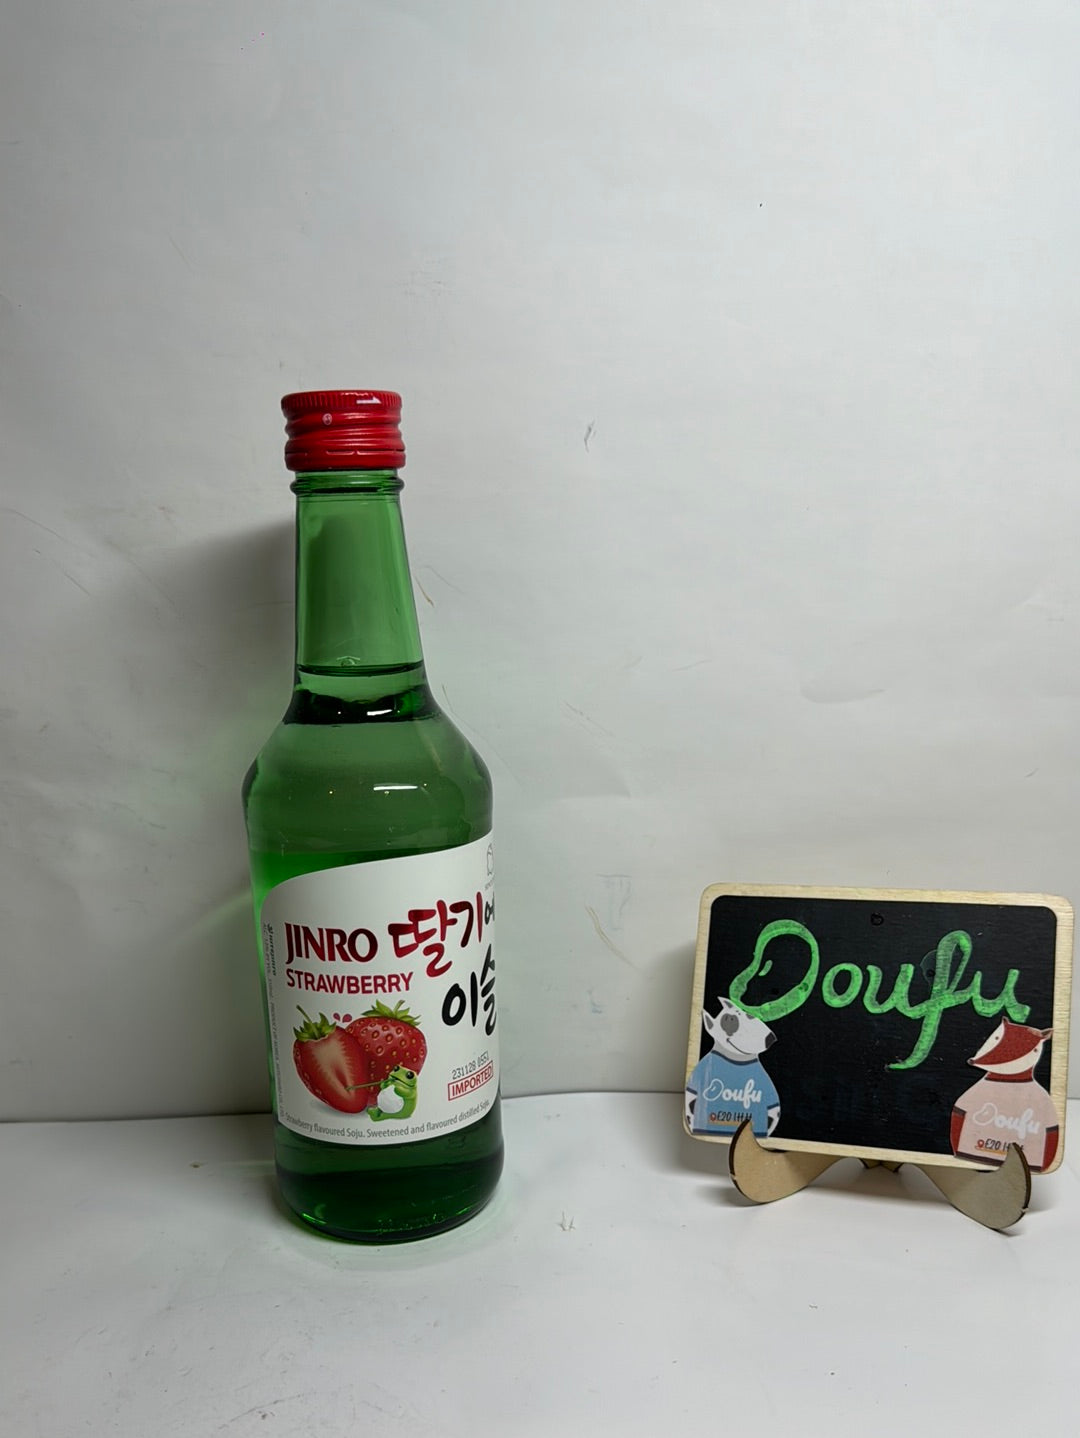 HiteJinro Chamisul Strawberry韩国烧酒草莓味350m